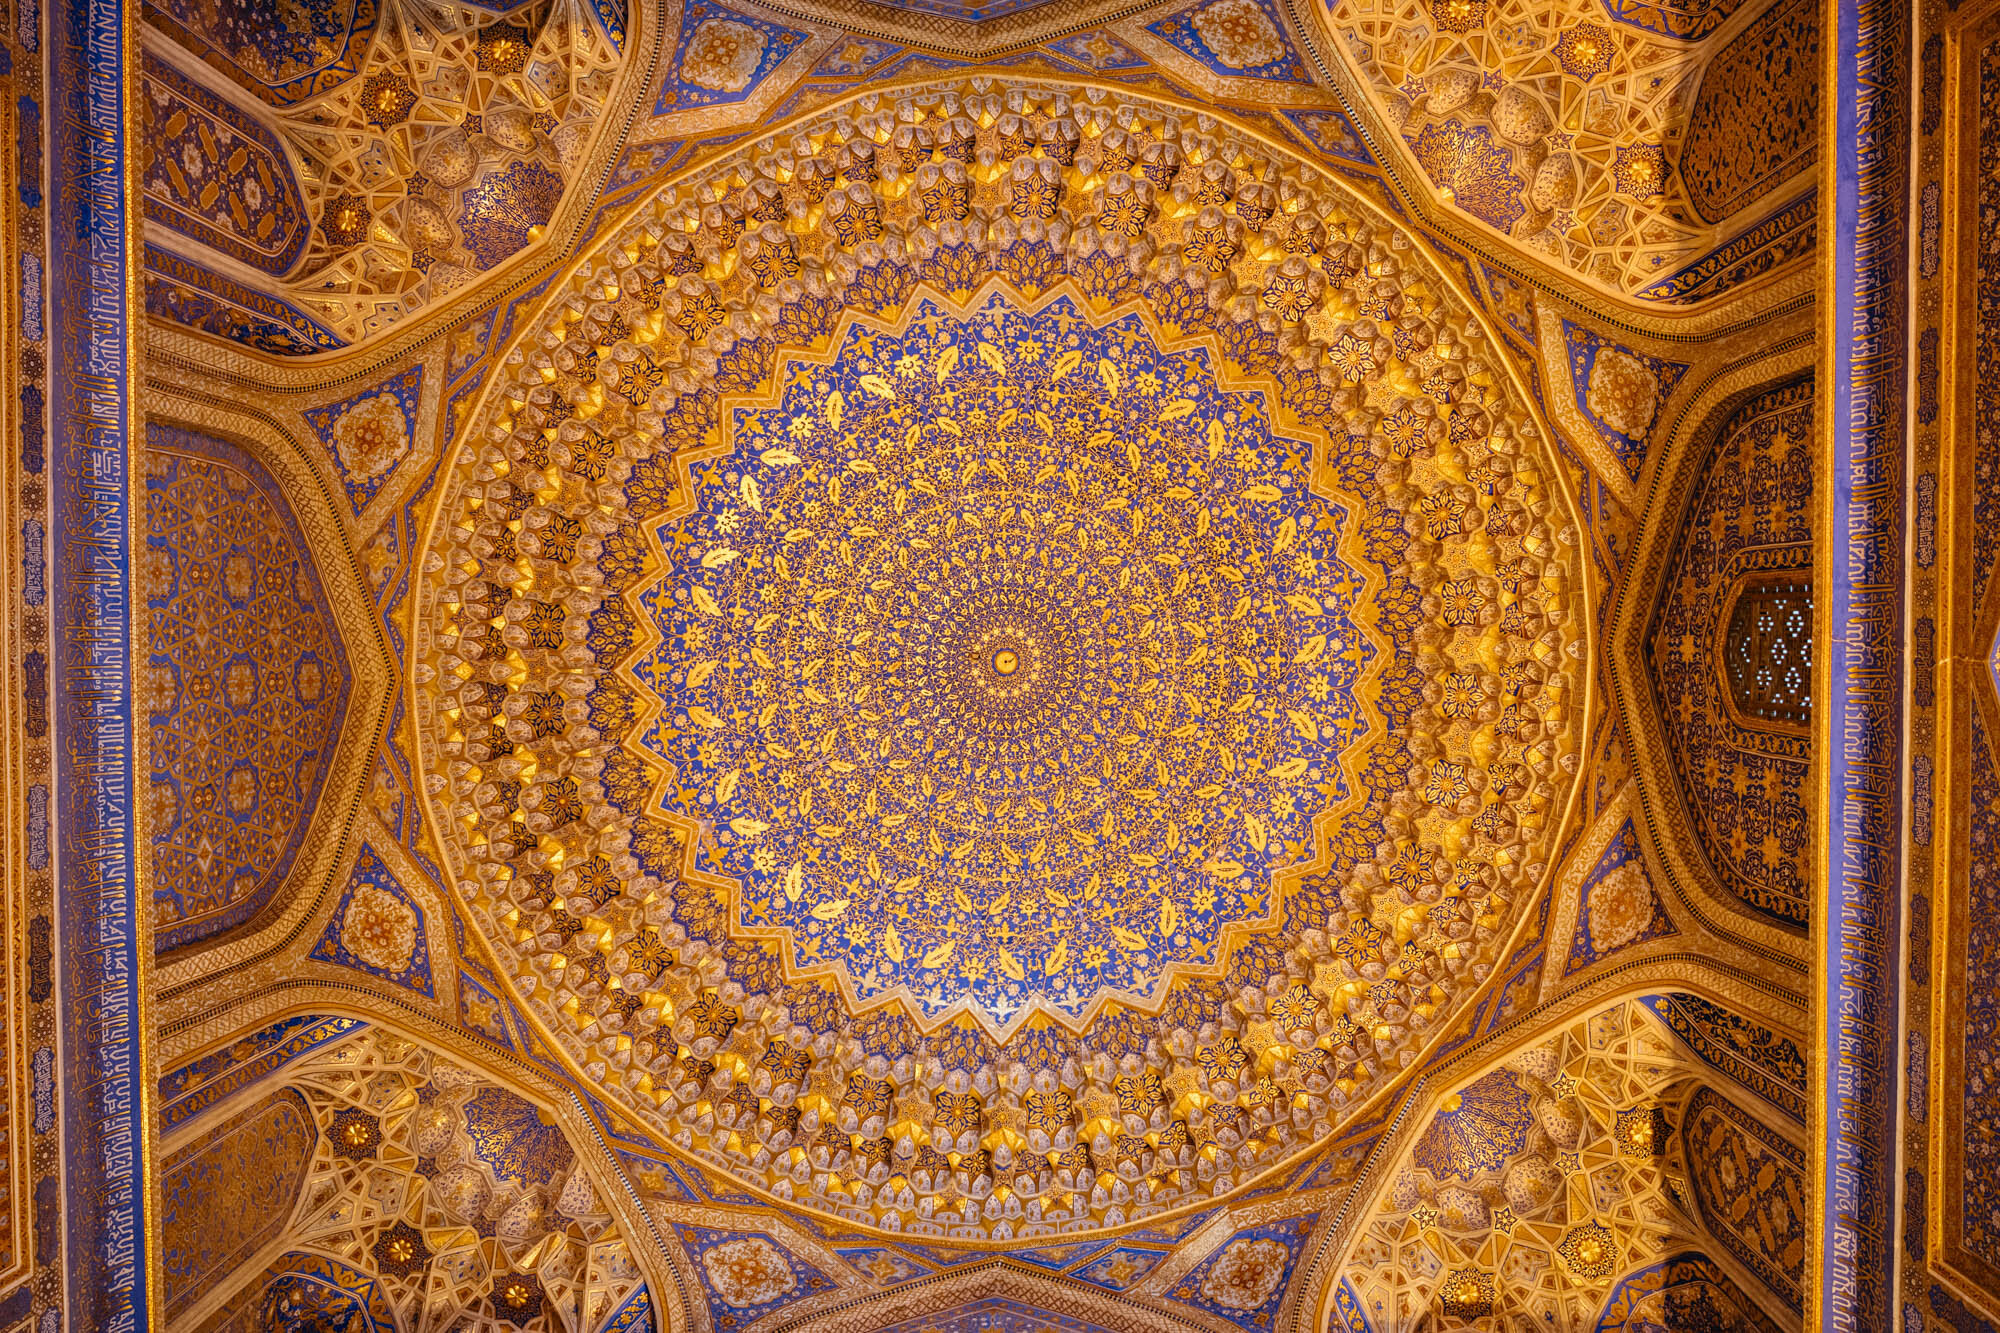  Ceiling details from the Tilya-Kori Madrasah, Samarkand 